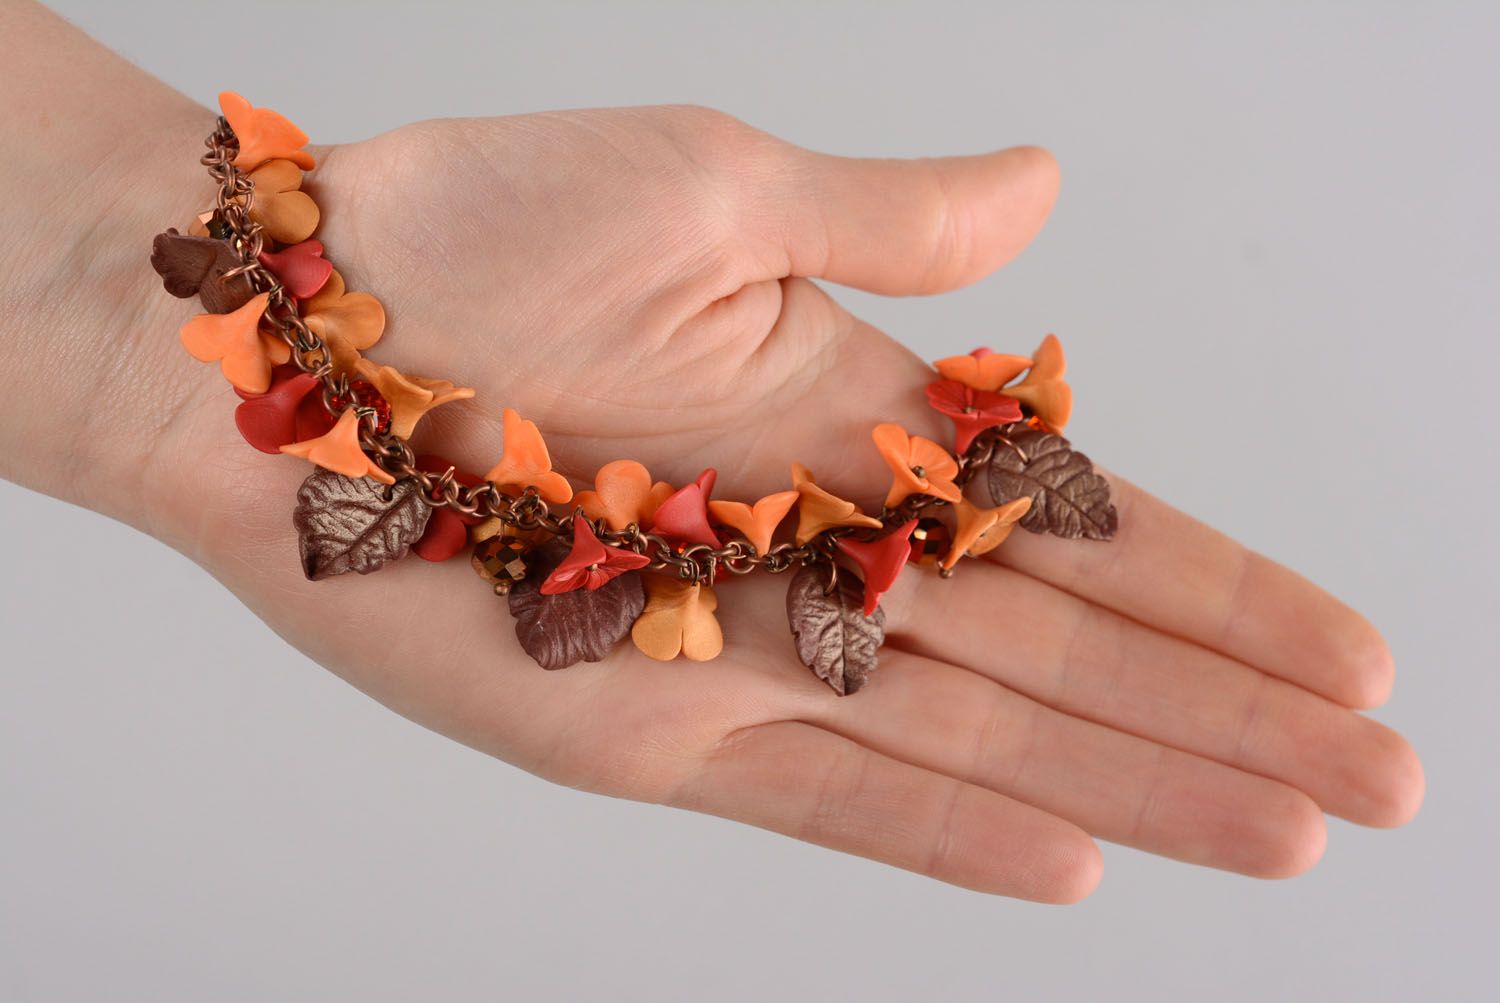 Autumn Leaves Bracelet Project Tutorial | WittyCrafts.com